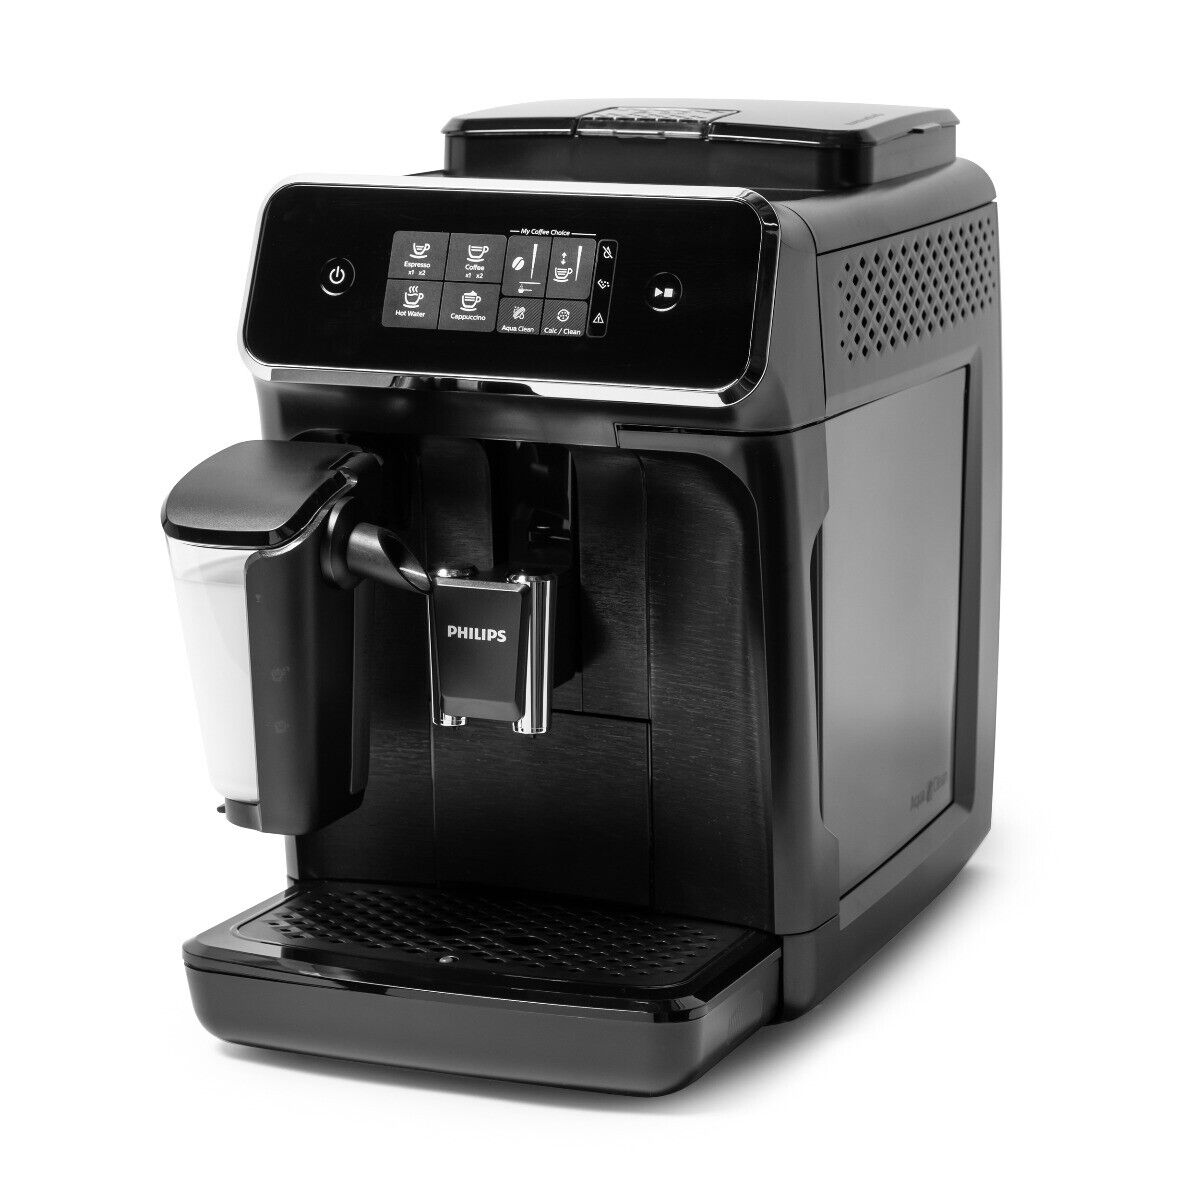 New Philips 2200 LatteGo Fully Automatic Espresso Machine, Black